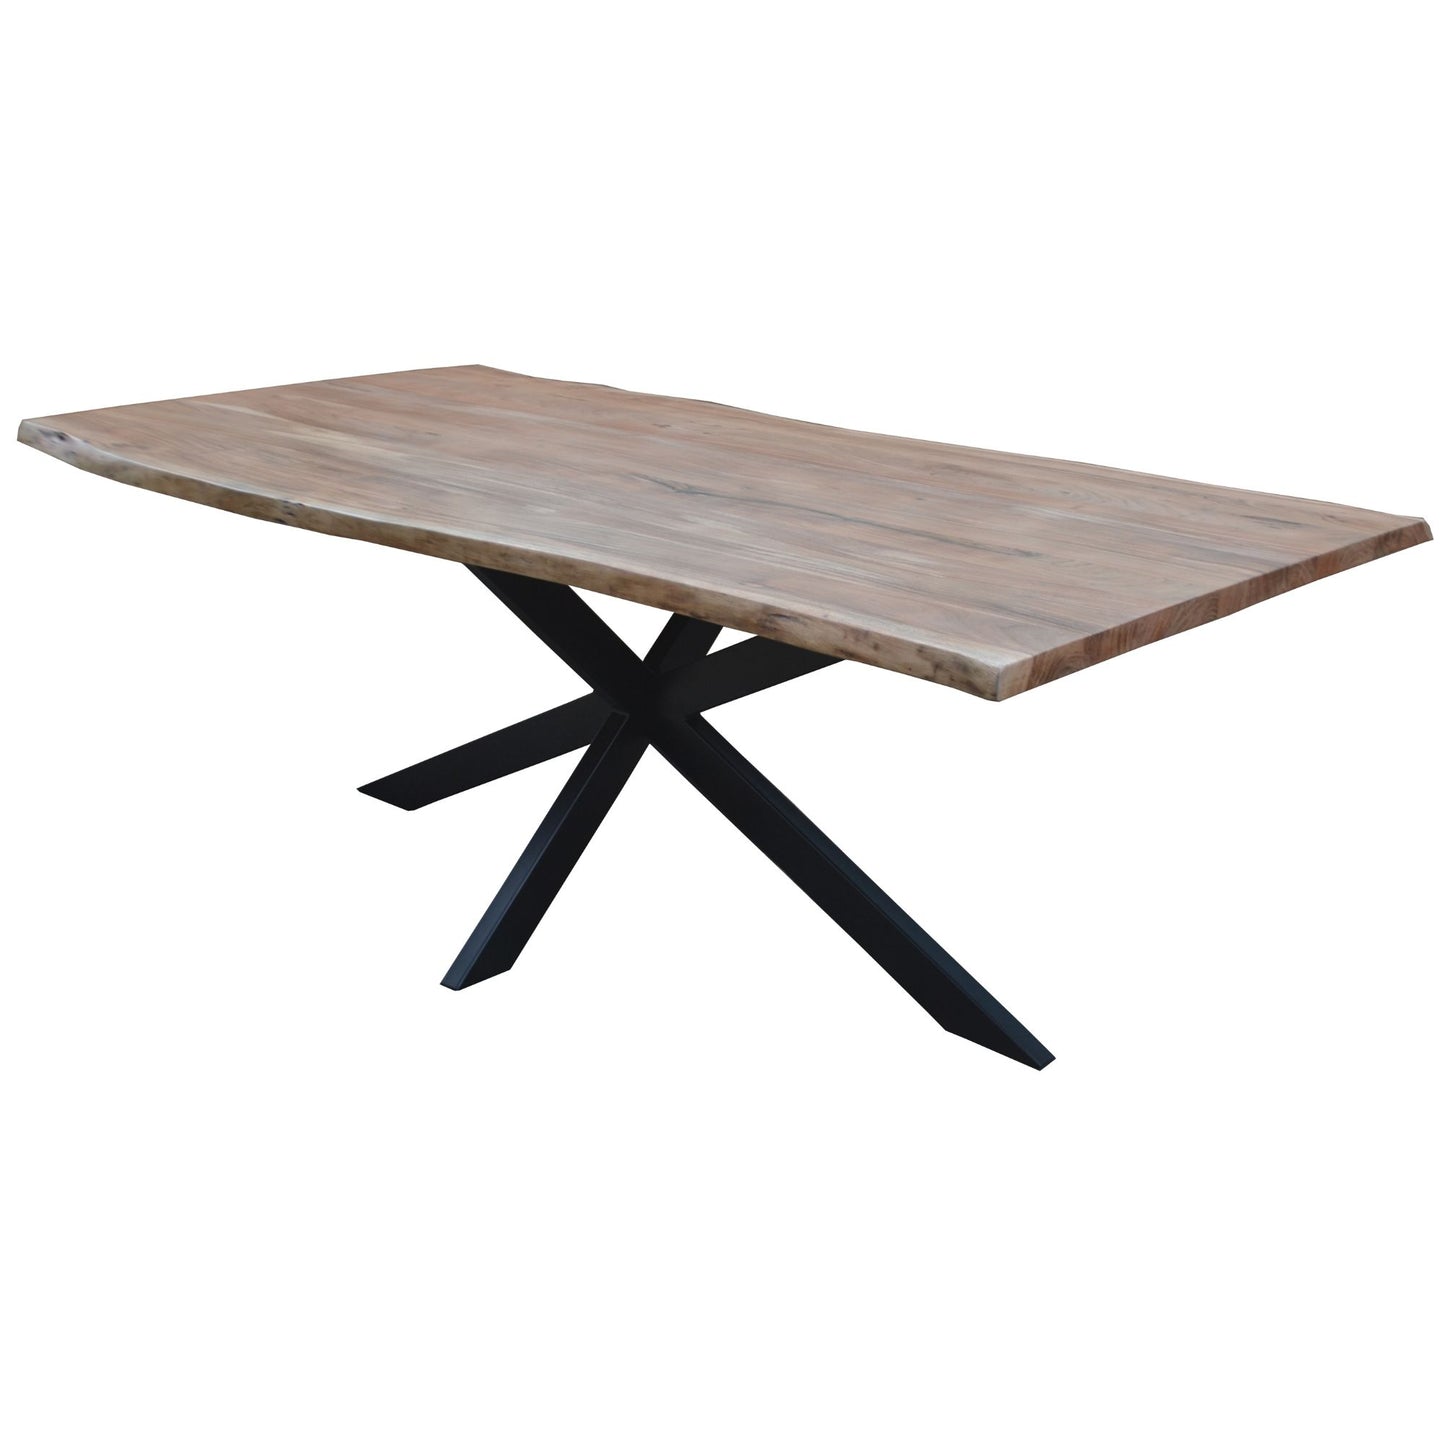 Solid Acacia Timber Wood Metal Leg Dining Table 210cm  - Natural & Black